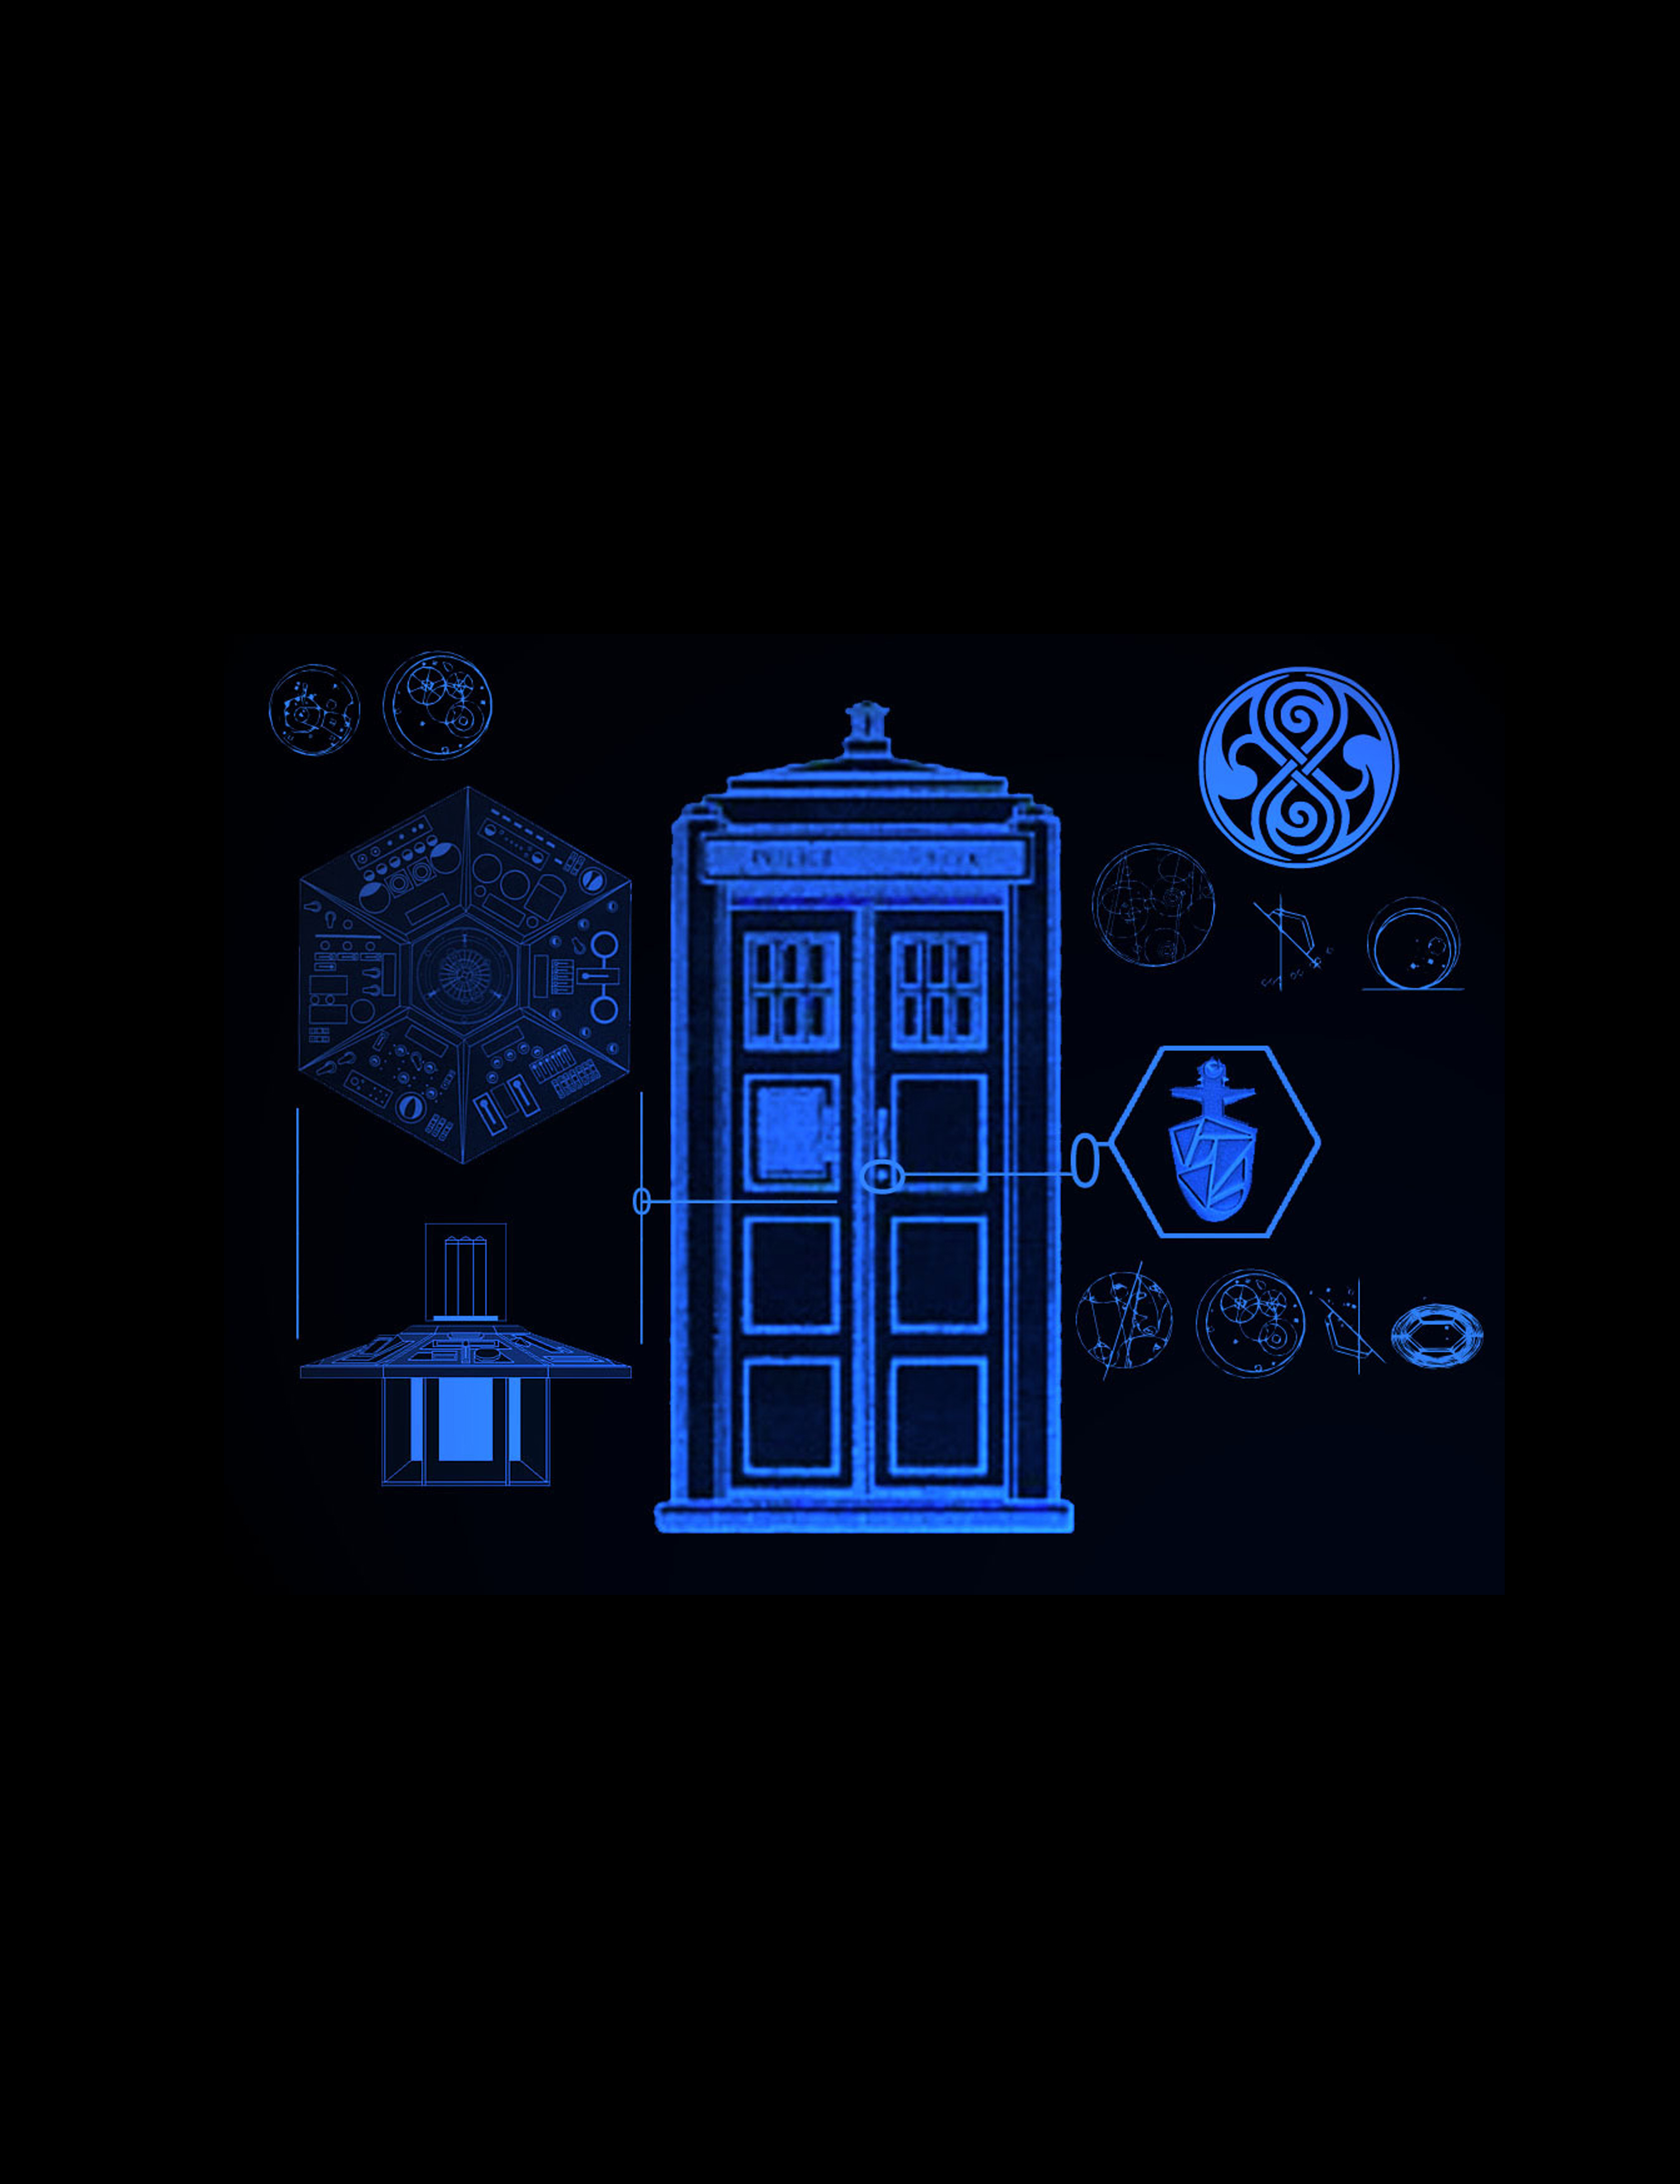 [45+] Doctor Who iPad Wallpapers | WallpaperSafari